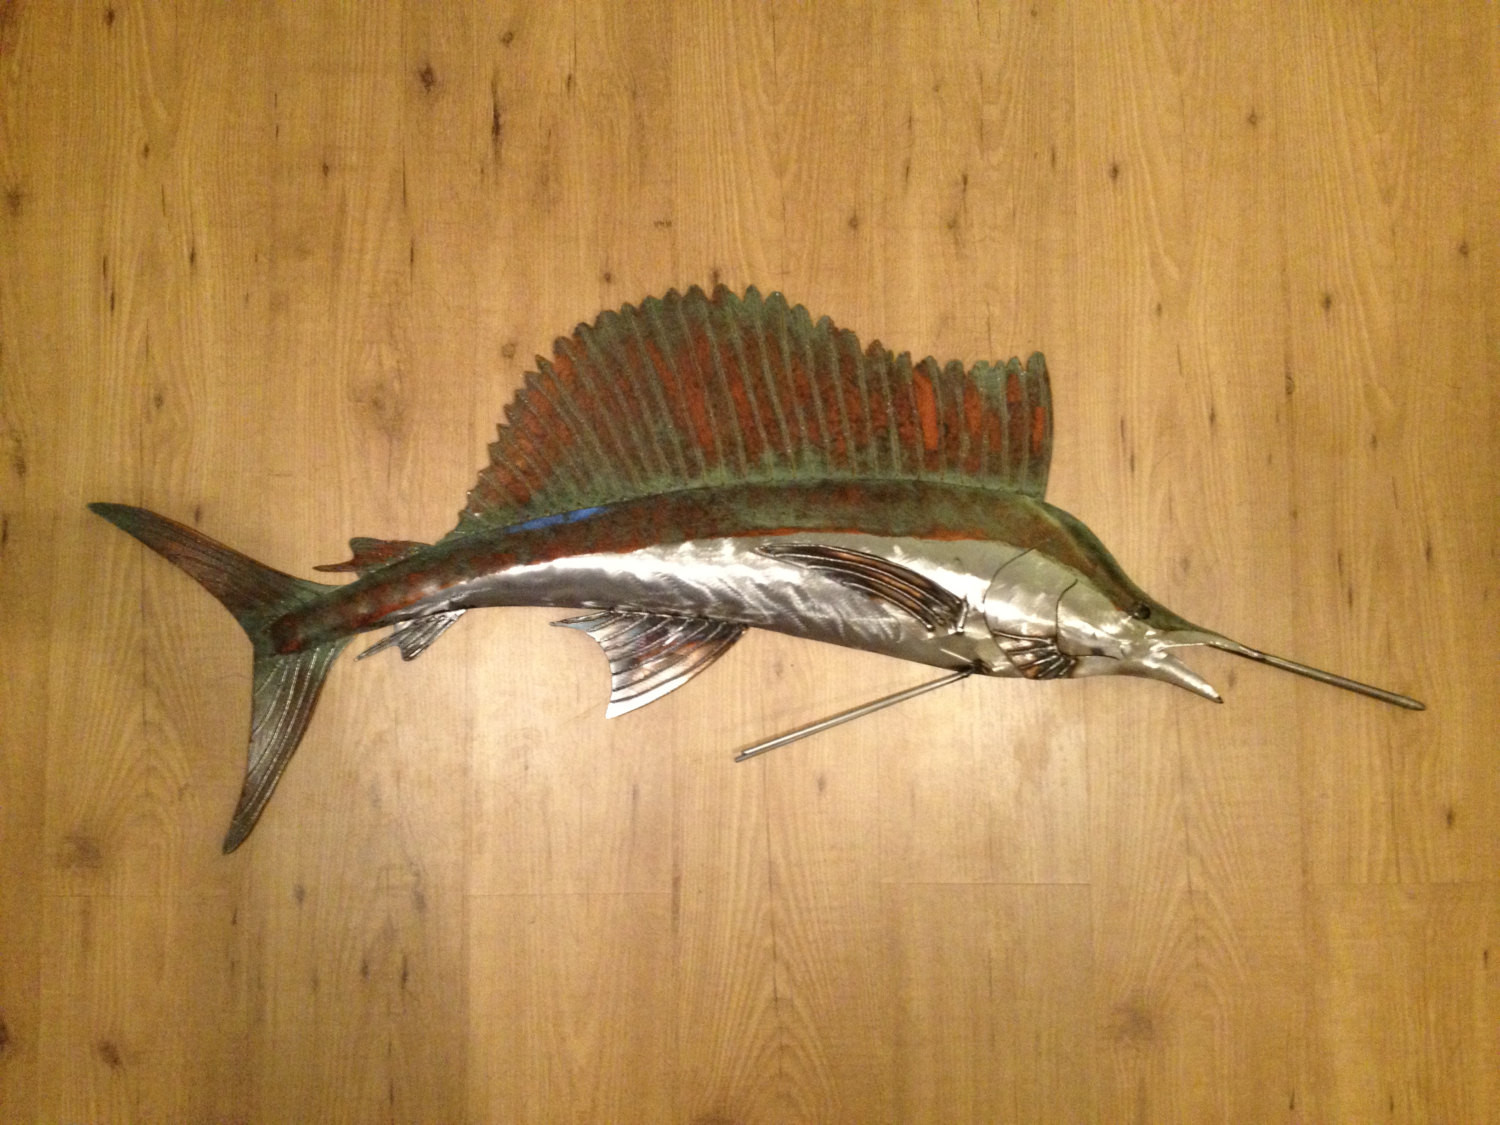 Best ideas about Metal Fish Wall Art
. Save or Pin Sailfish Metal Wall Art Fish sculpture by SallenbachFishArt Now.